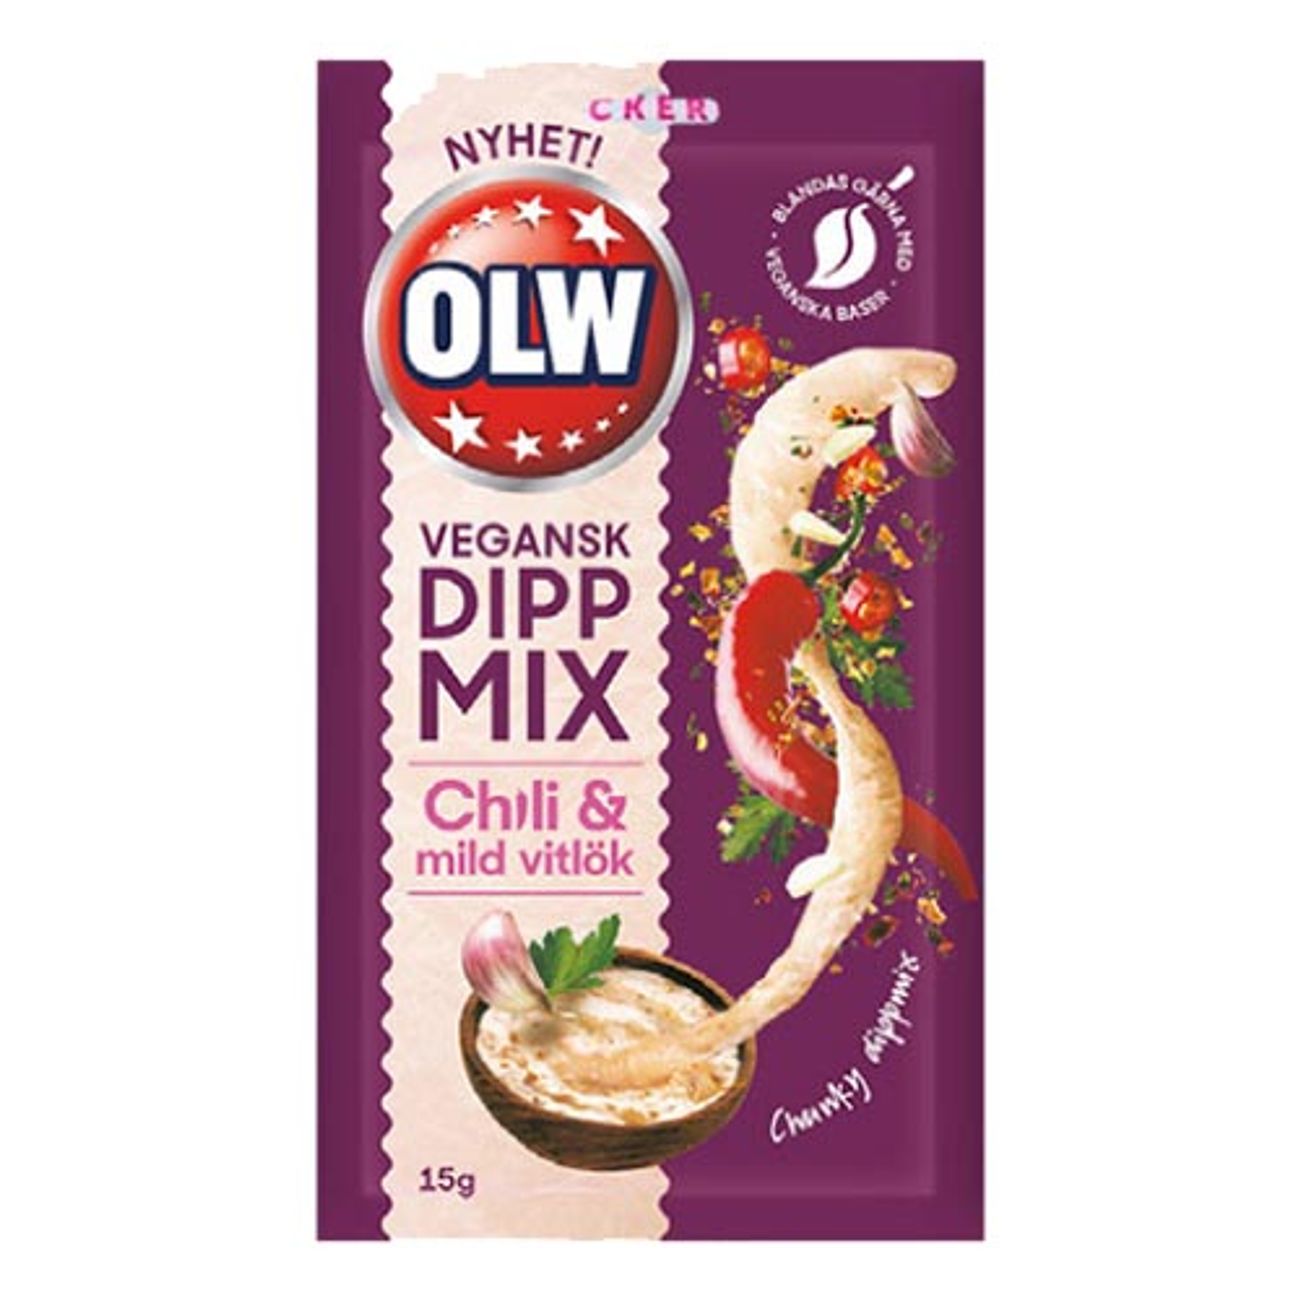 olw-dipmix-chili-mild-vitlok-vegan-1